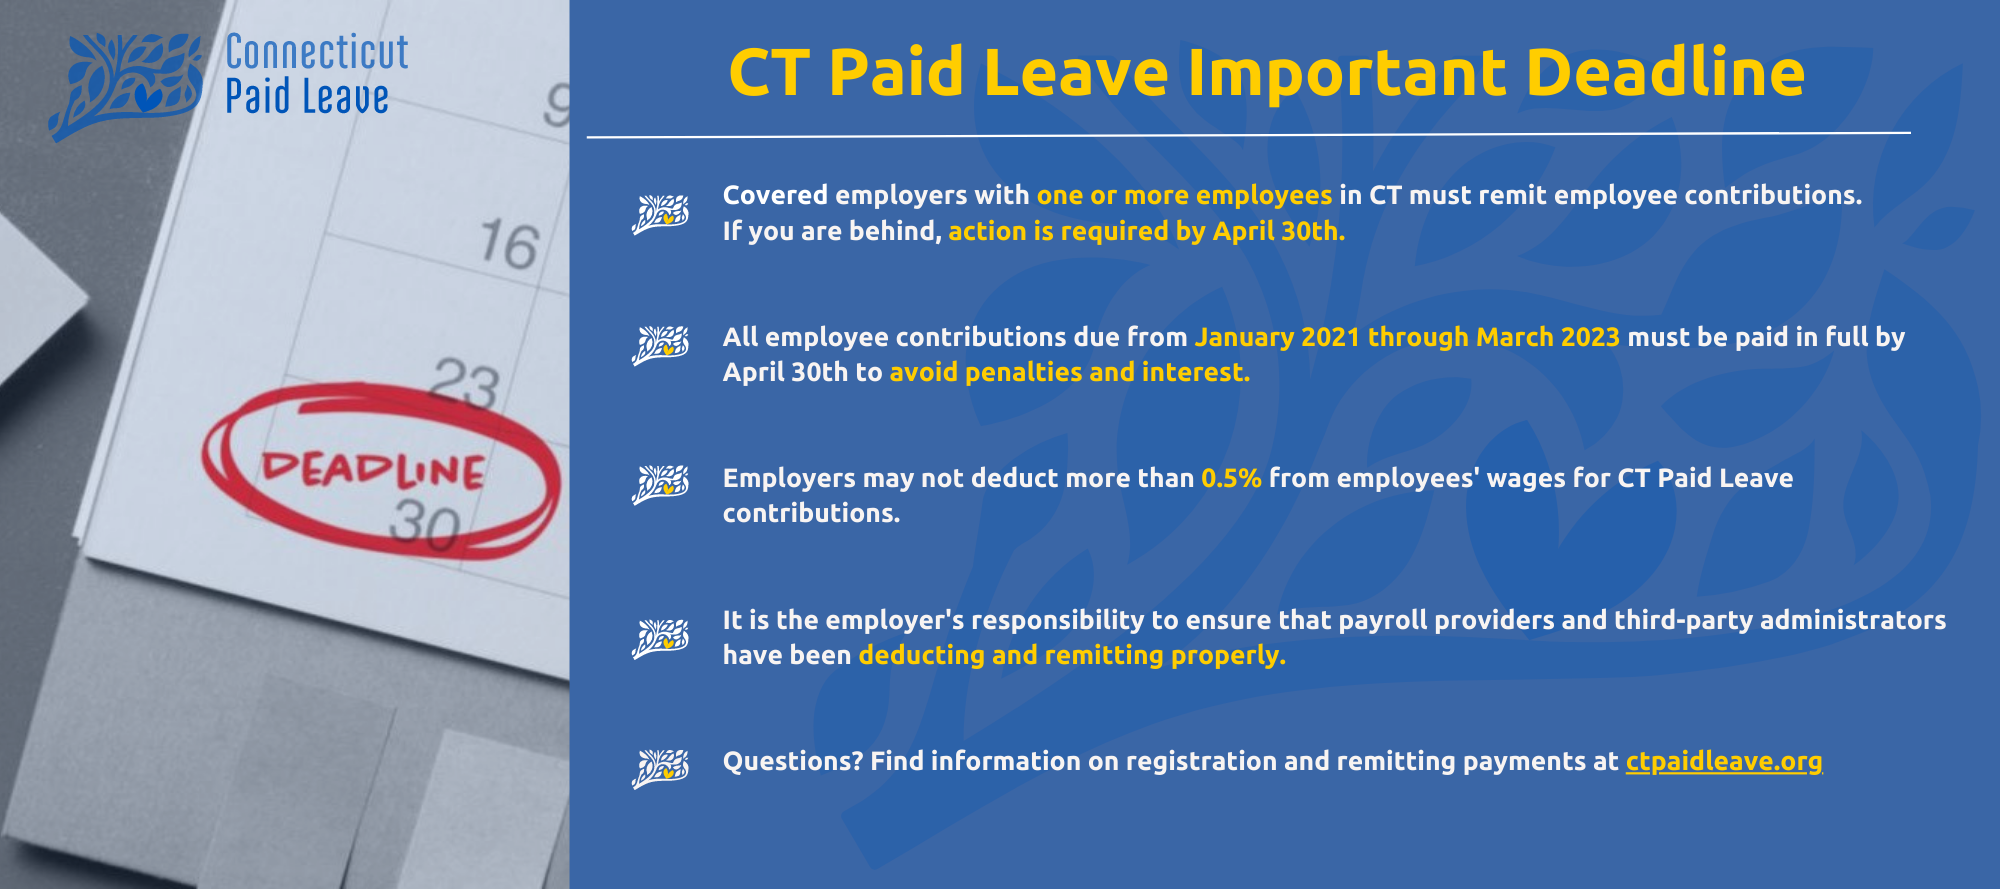 CT Paid Leave Important Deadline